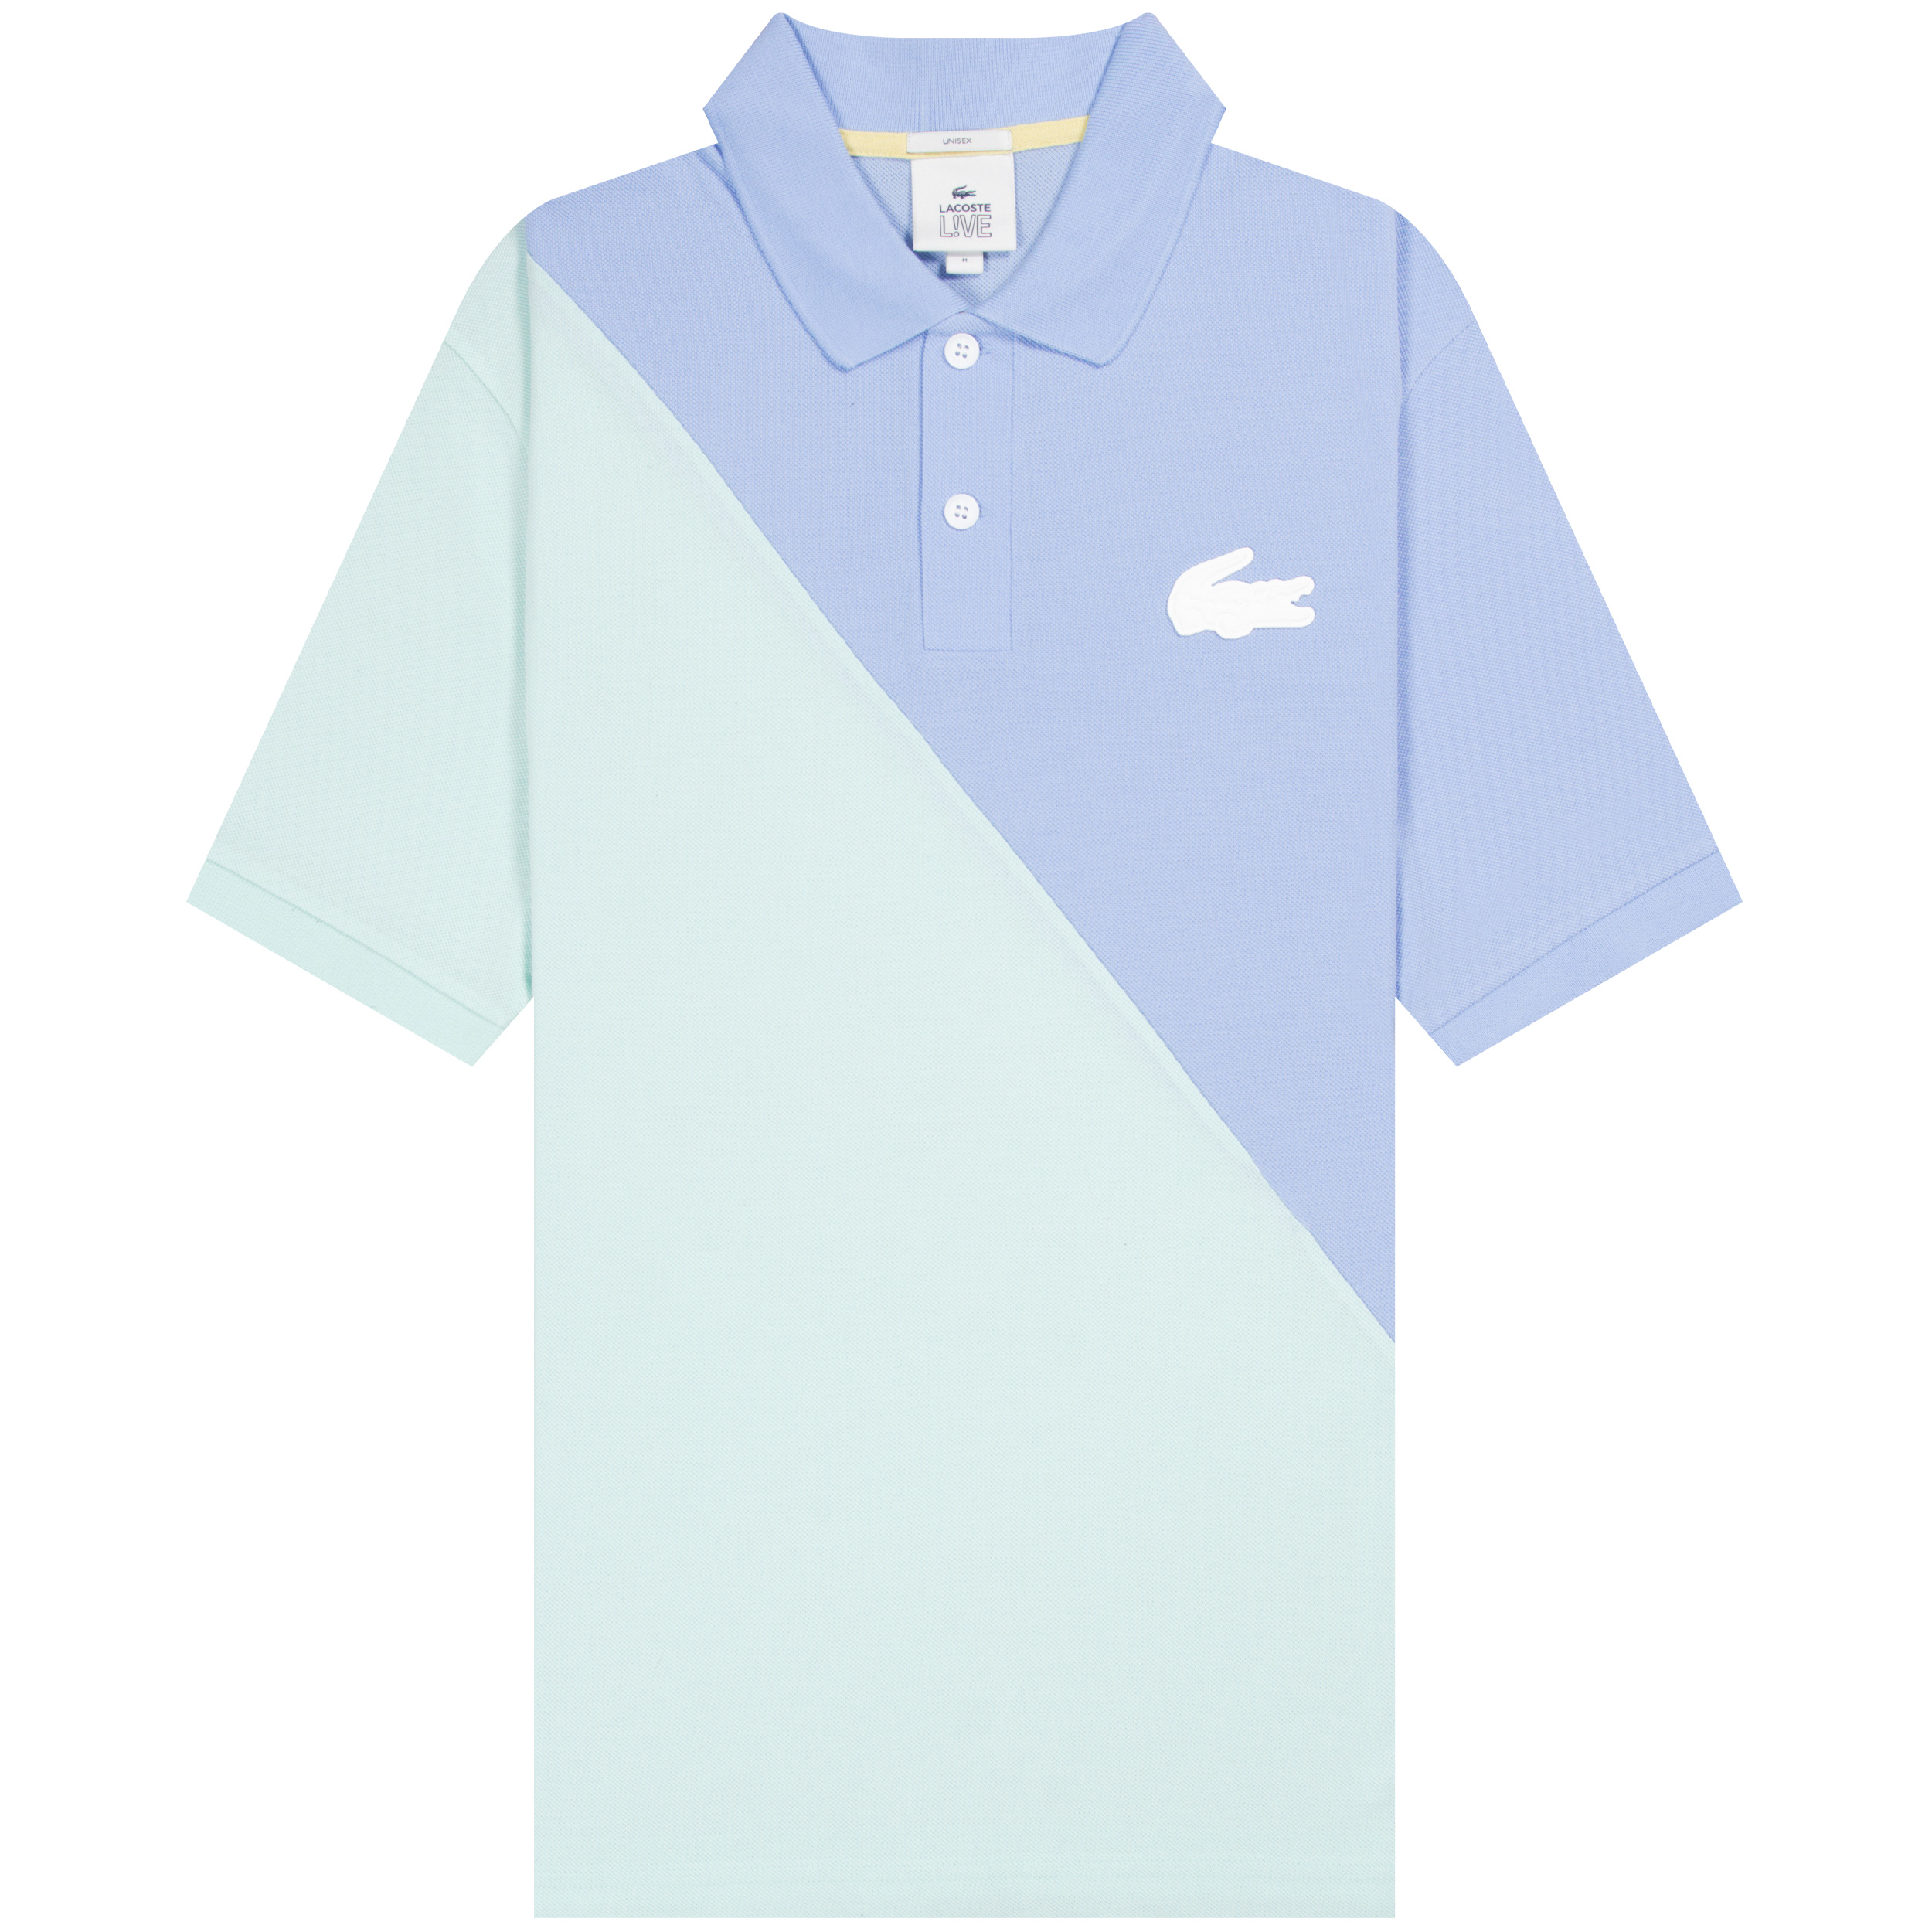 Lacoste ’Colourblock’ Cotton Polo Blue/Turquoise